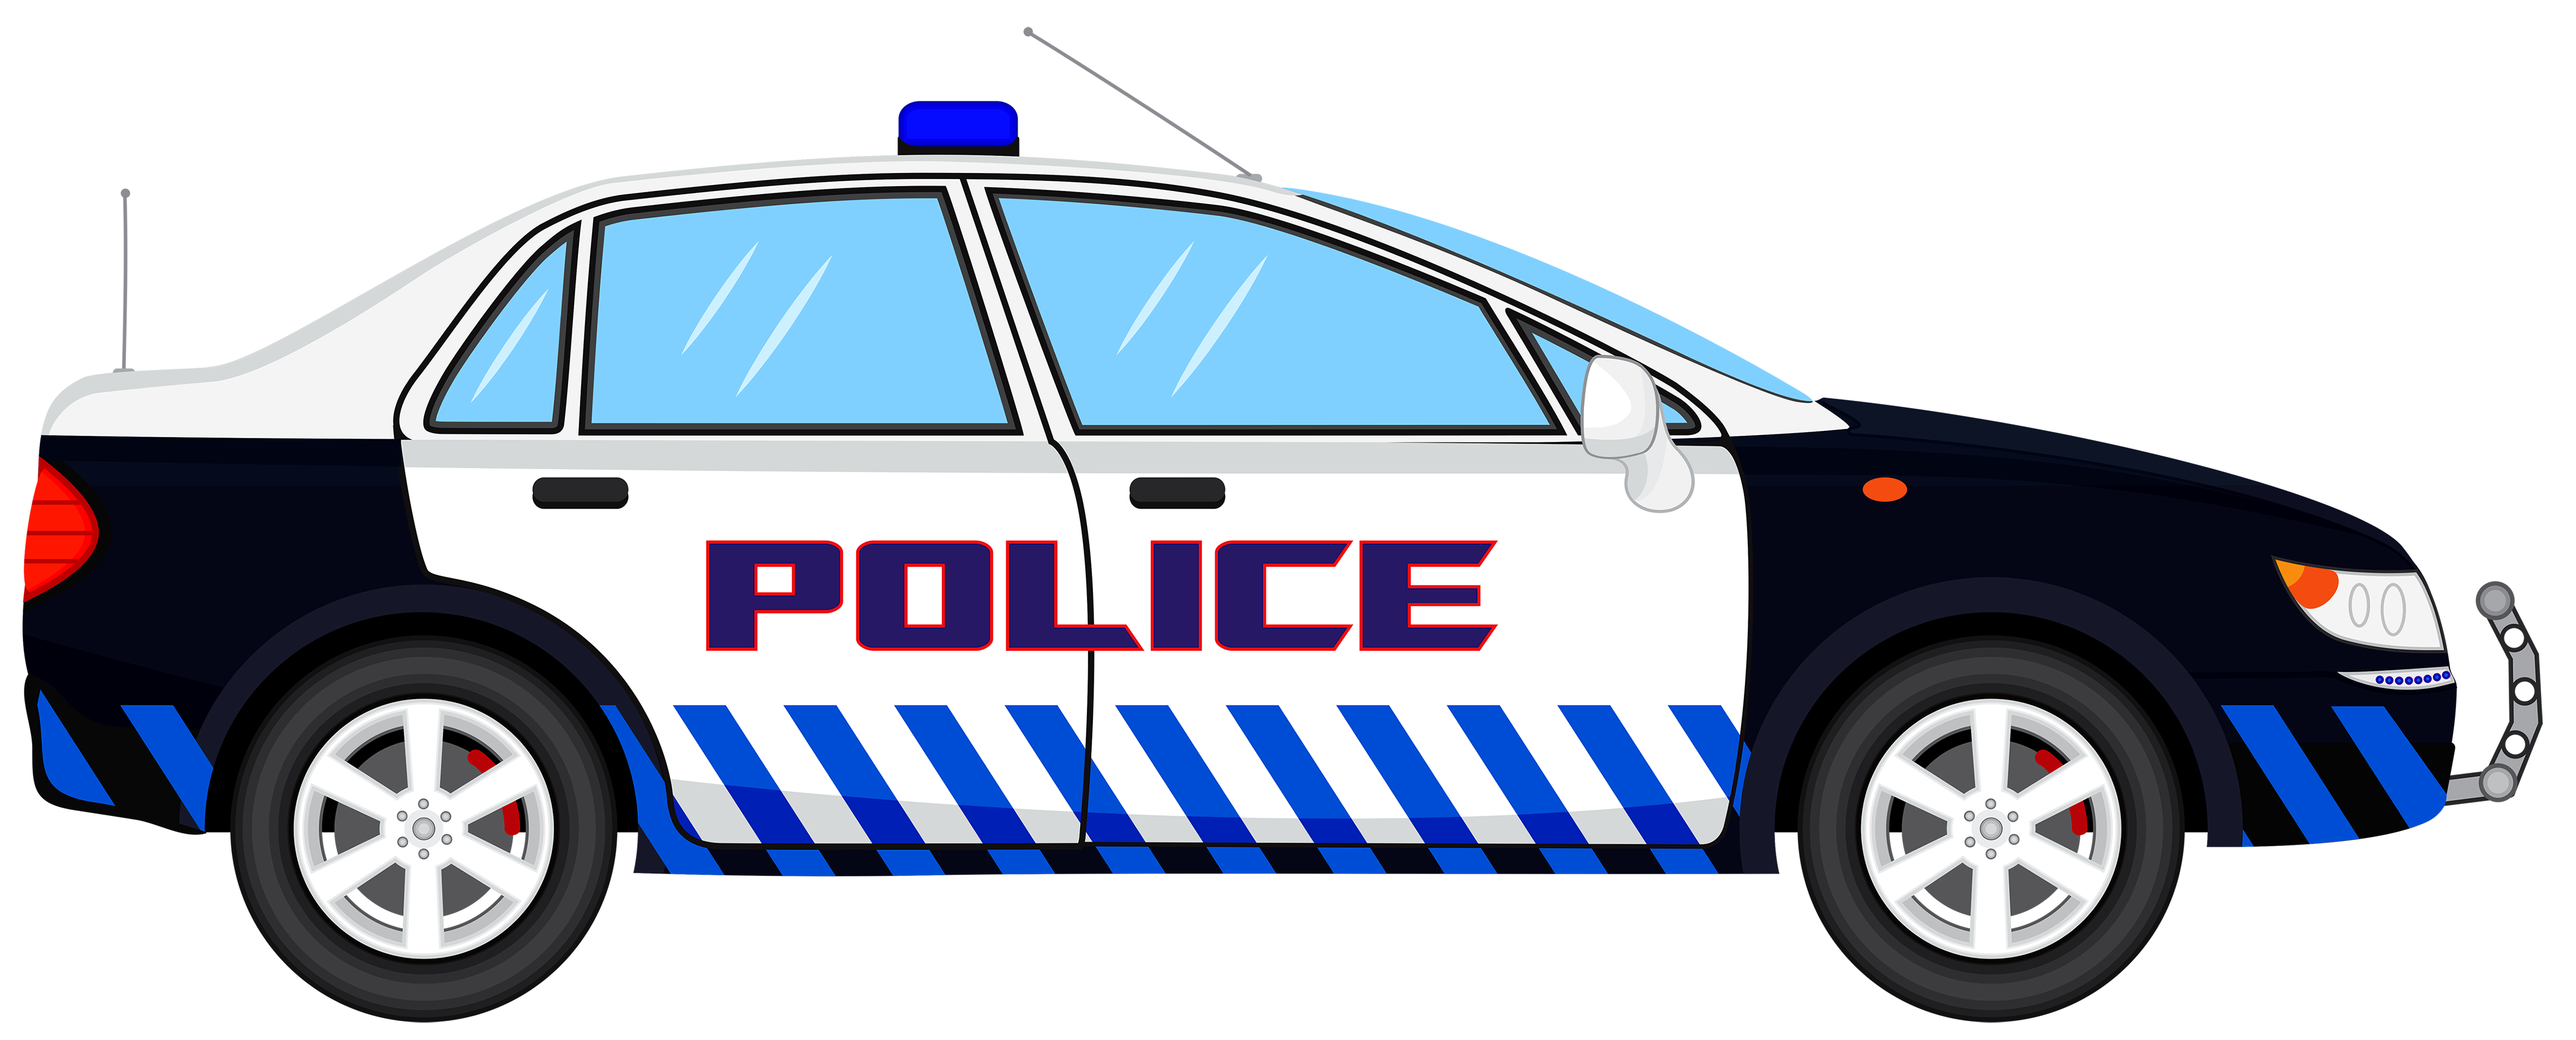 police-car-transparent-clip-art-image-clipartix